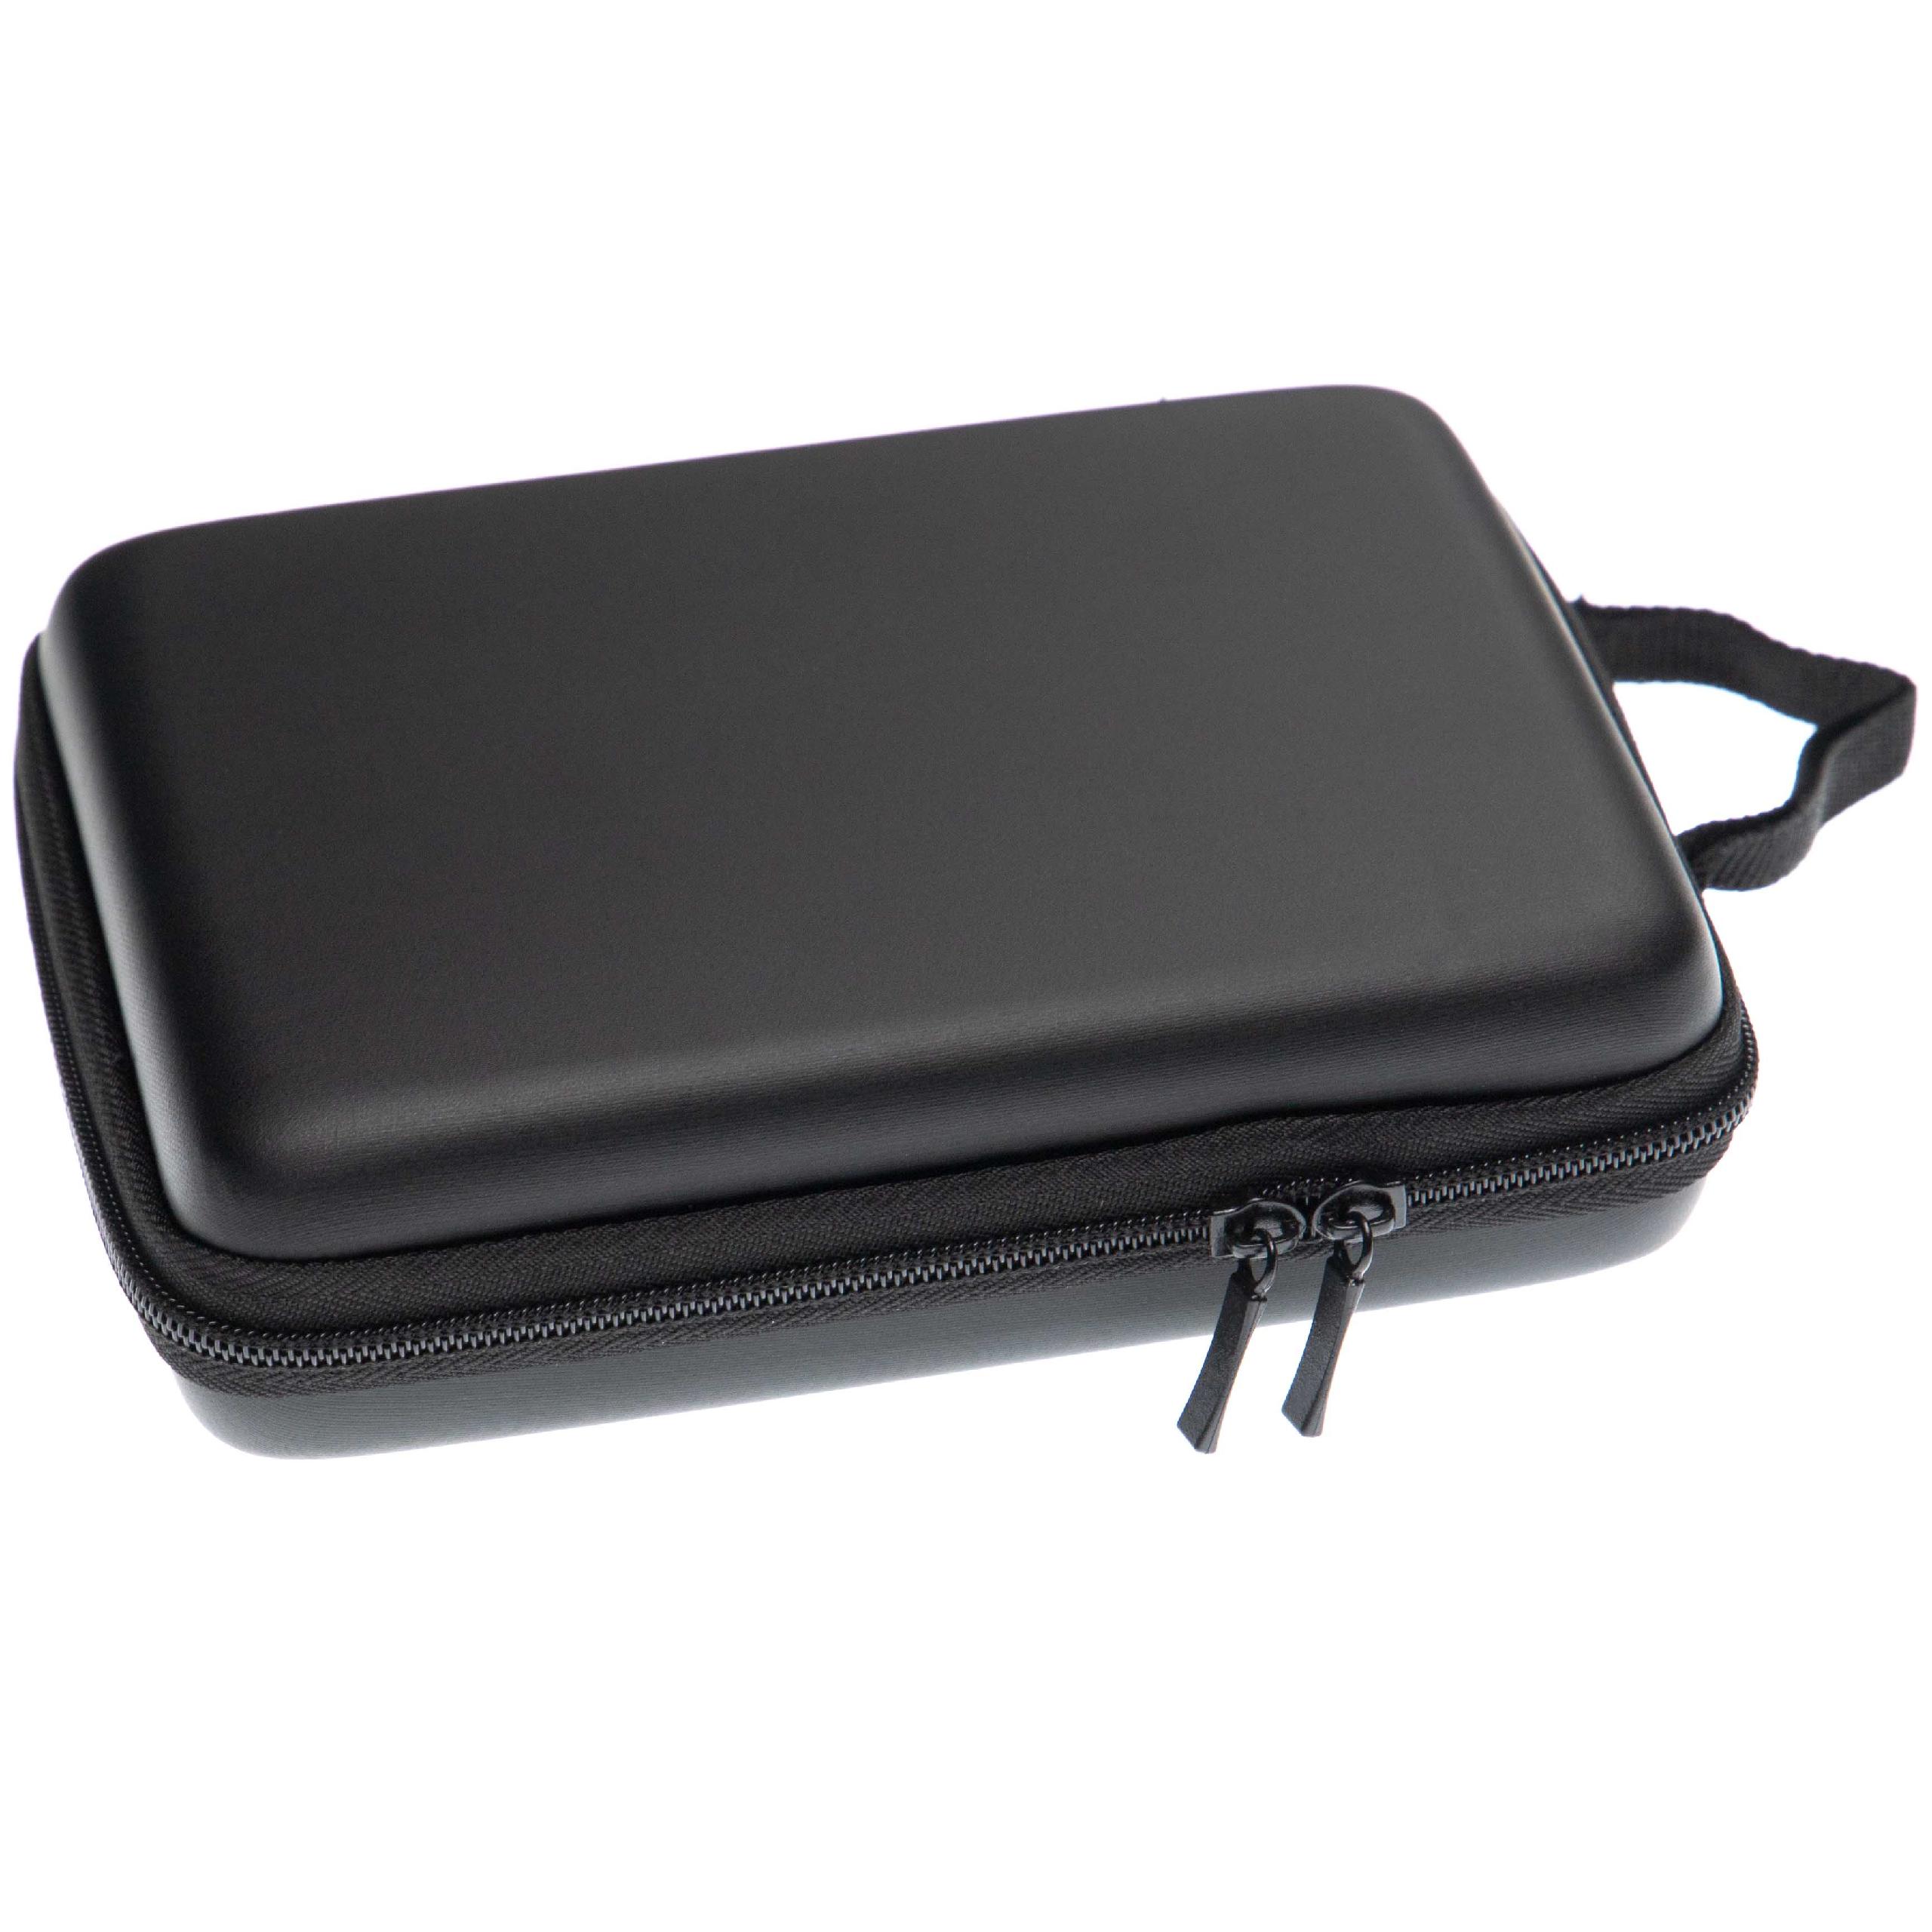 vhbw Bolsa consola de juegos -funda protectora, bolsa de transporte + correa con mosquetón, negro